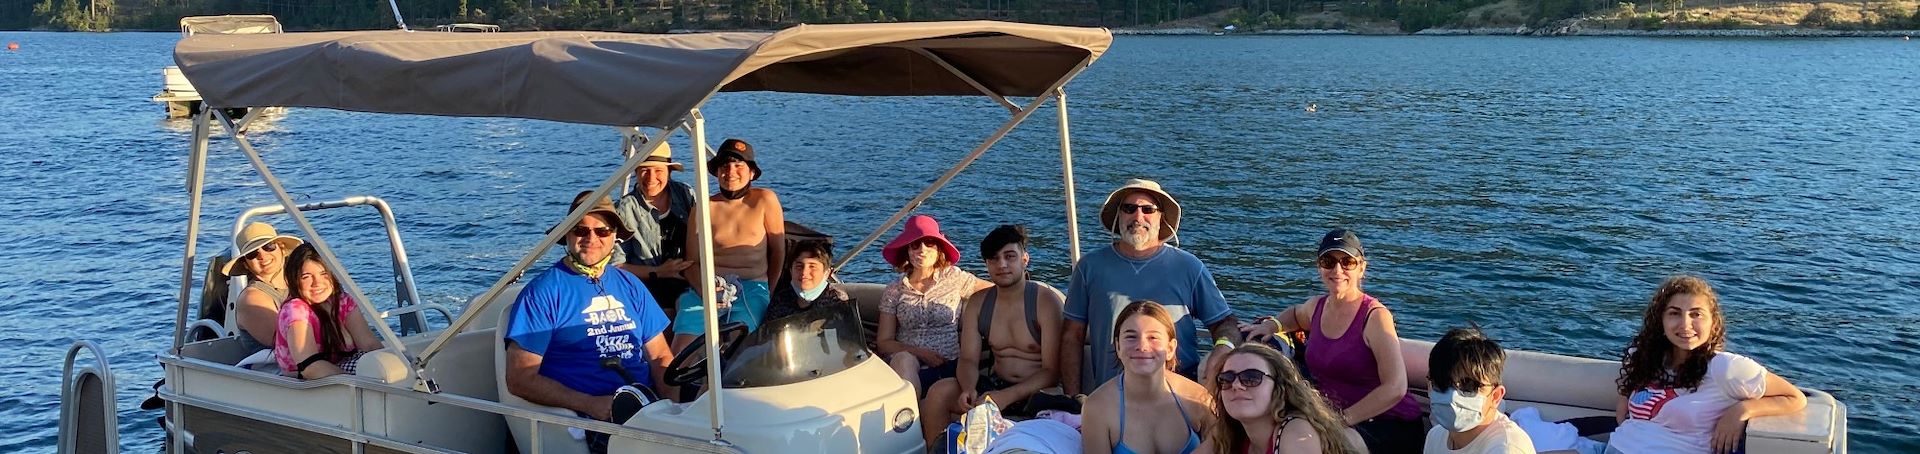 Family Reunions At The Pines Resort Bass Lake California